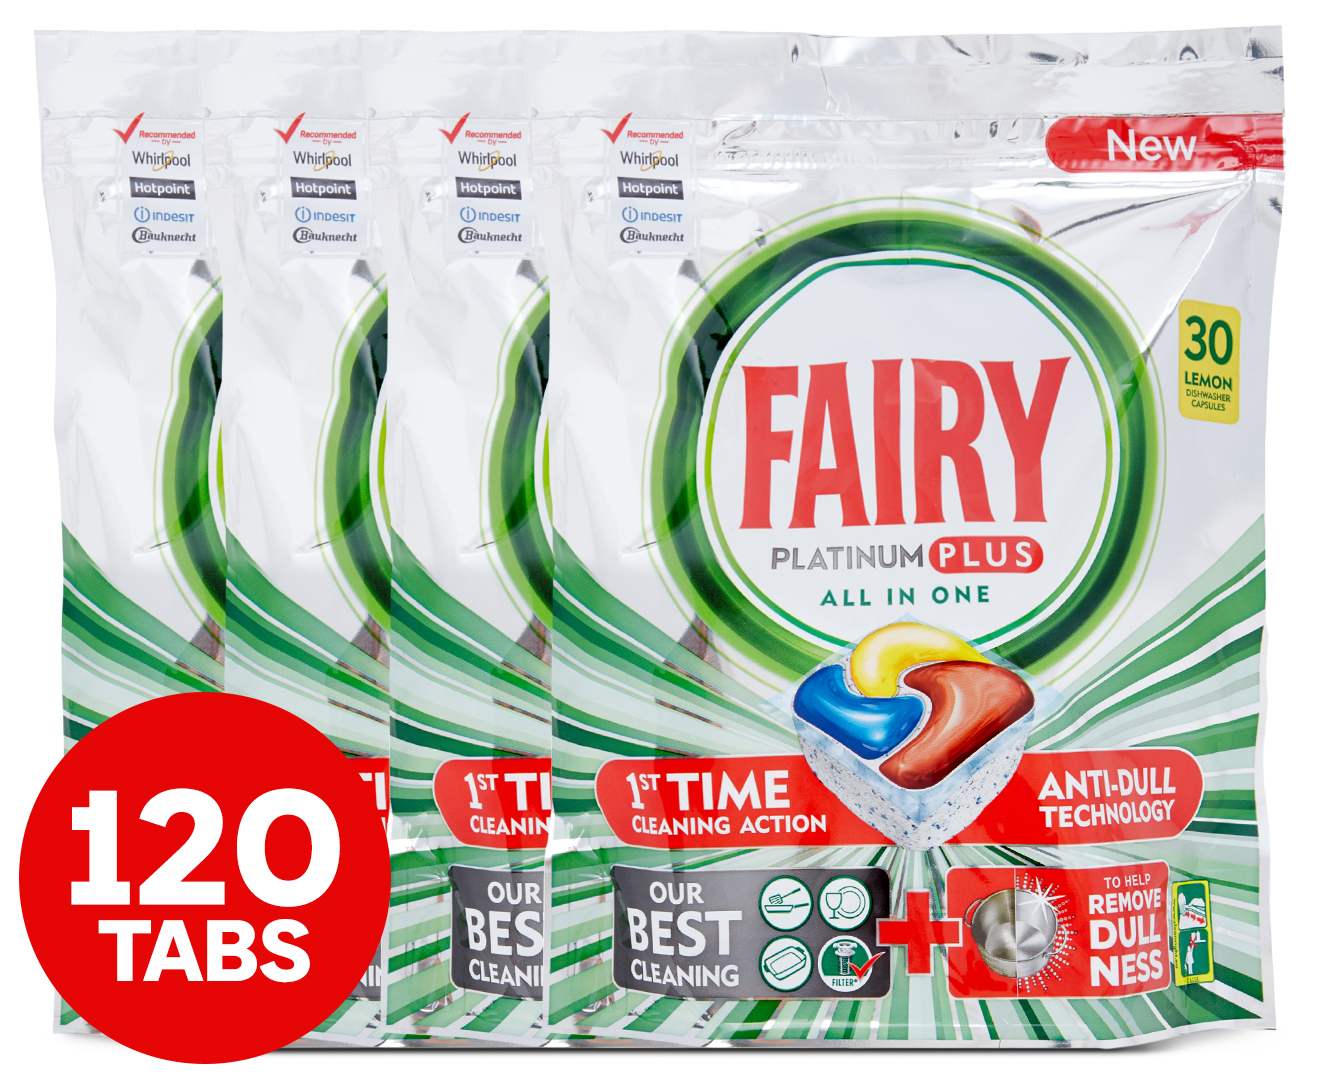 Fairy Platinum Plus Dishwasher Tablets Lemon 30 Pack